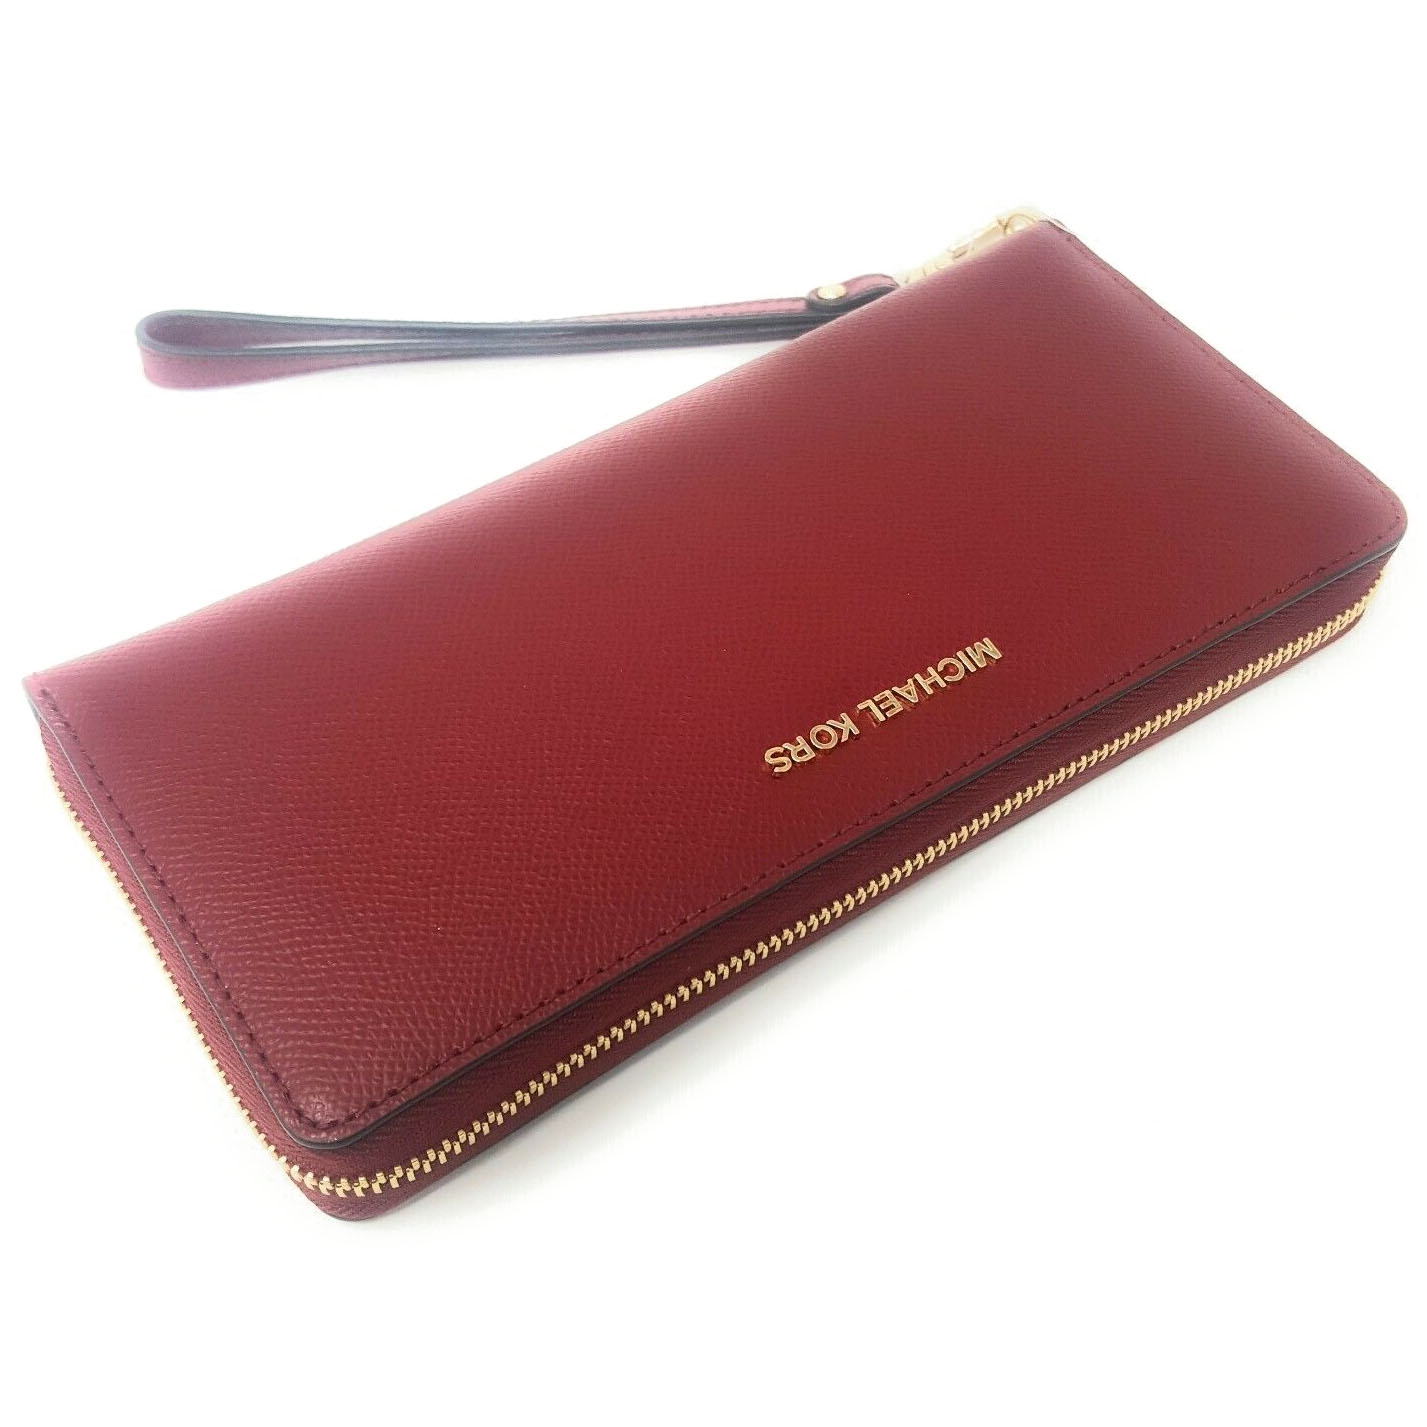 Michael Kors Wallet Wristlet With Gift Bag Jet Set Travel Continental Leather Wallet Wristlet Maroon Dark Red # 32S5GTVE9L